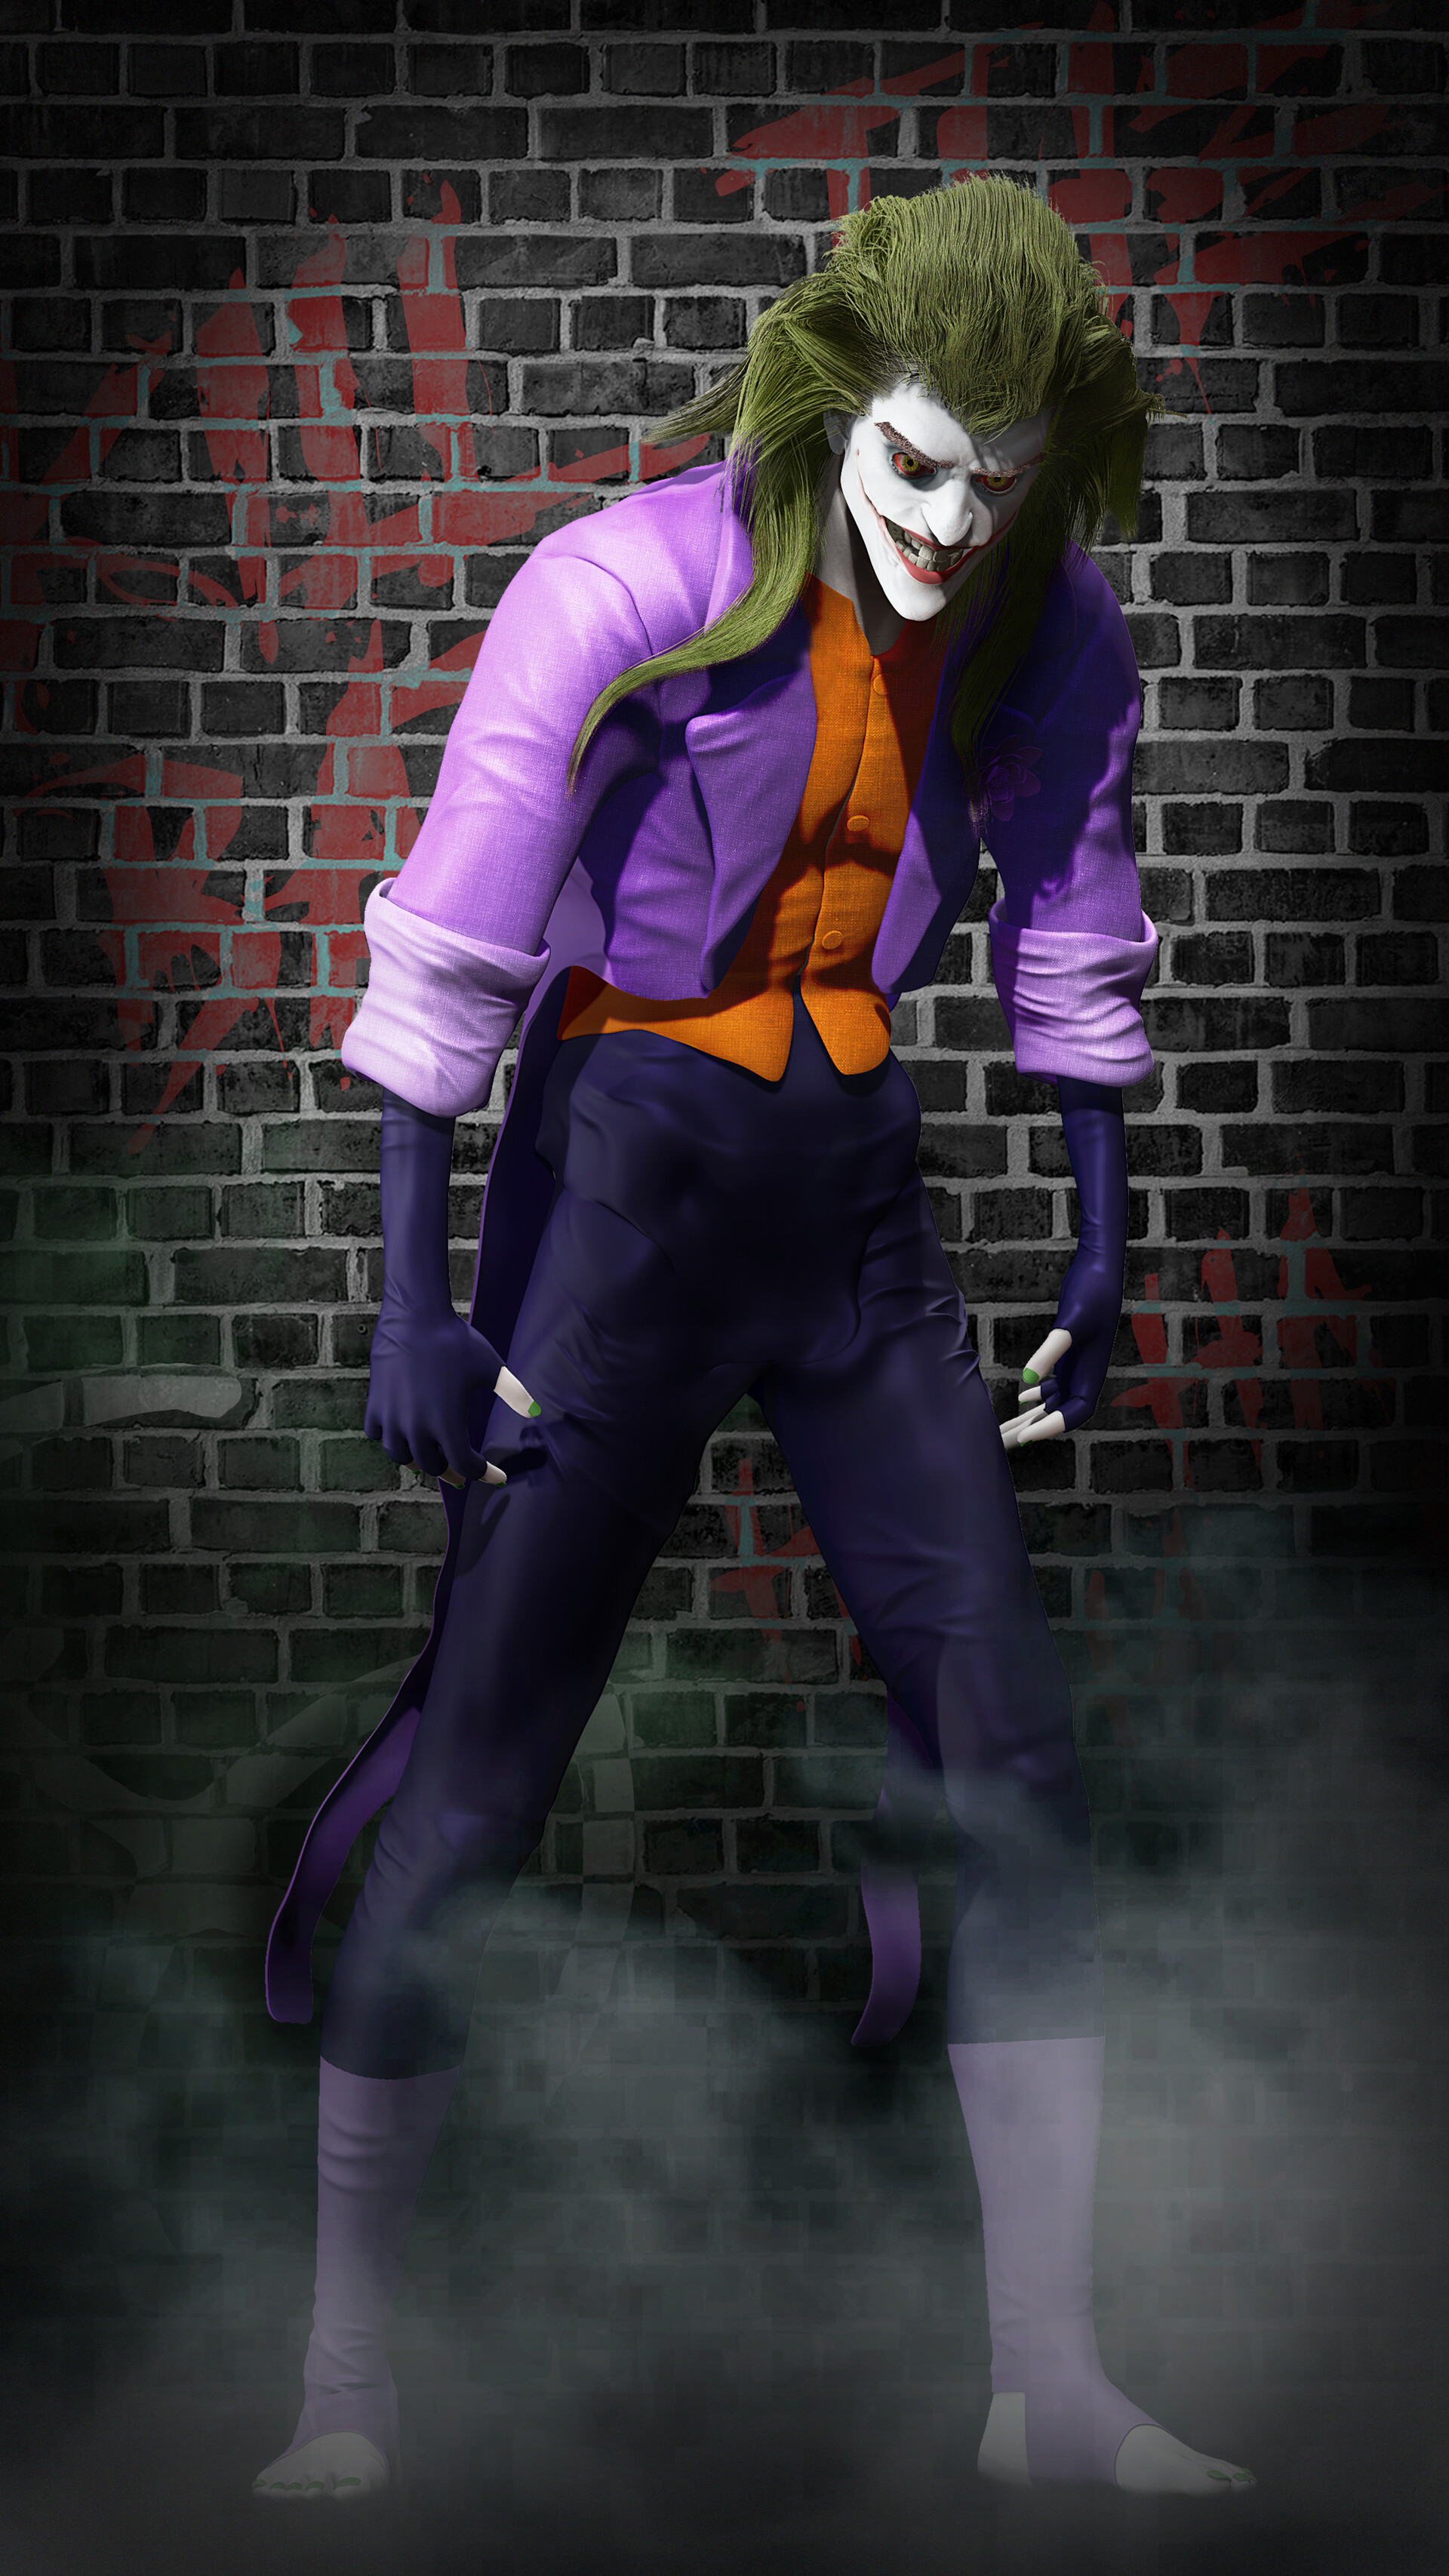 Siddarth Hascoët - The Joker (animated series)